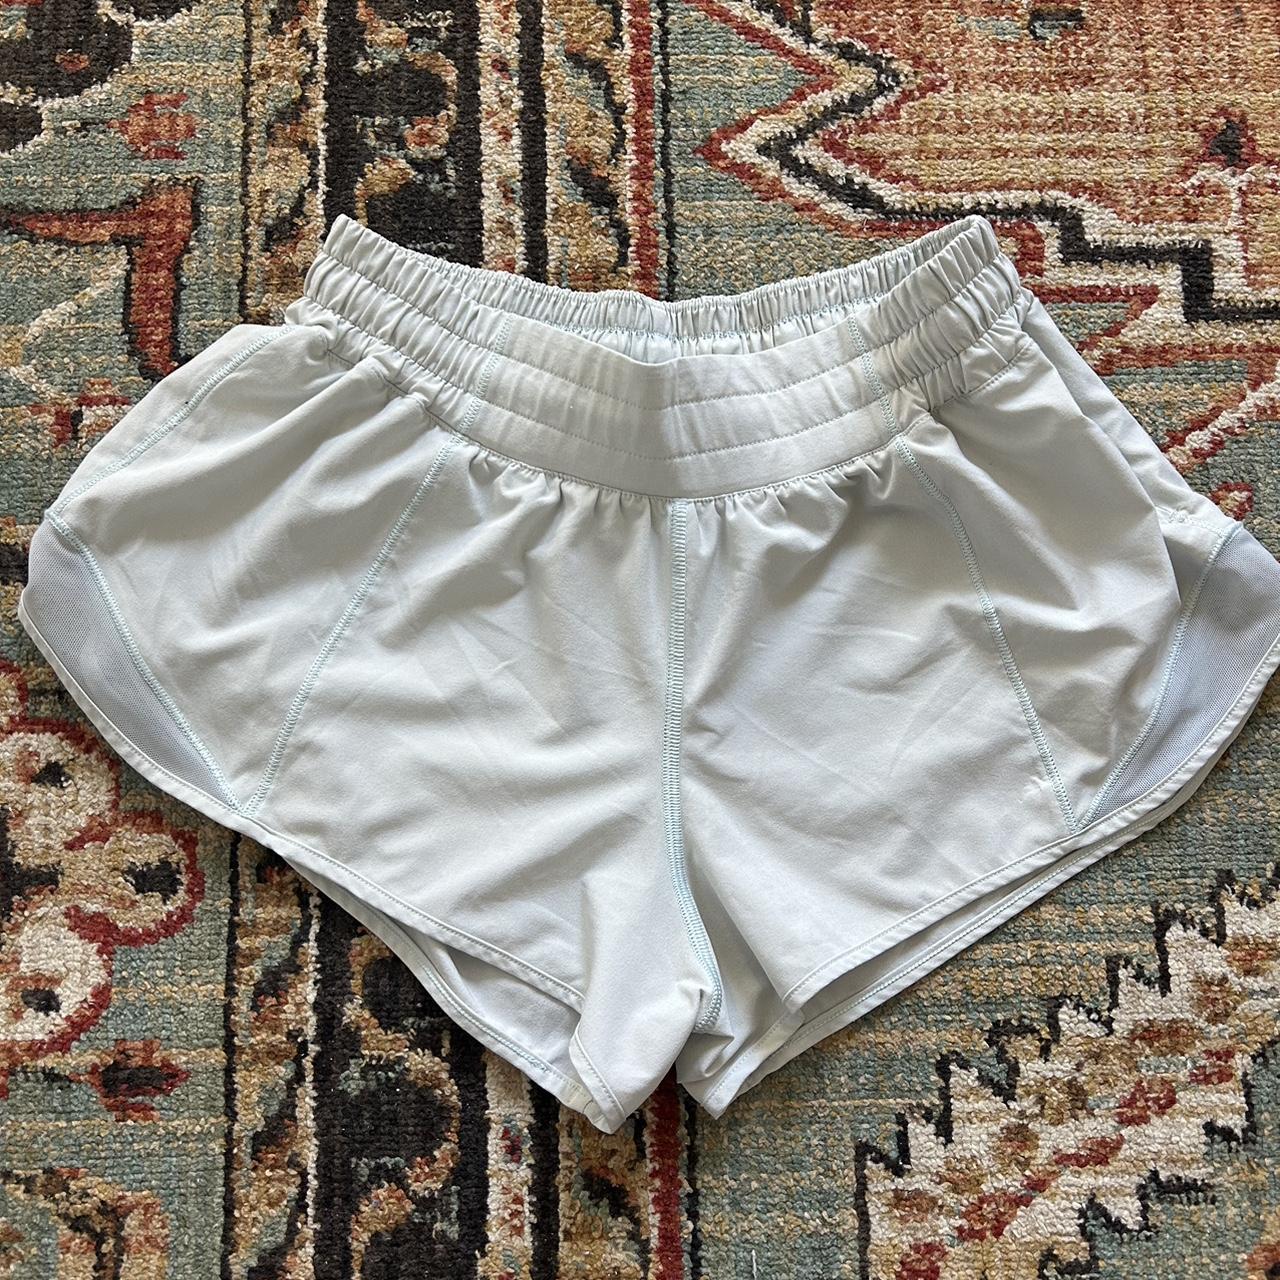 Lululemon hotty hot shorts low rise 2.5 inch inseam - Depop